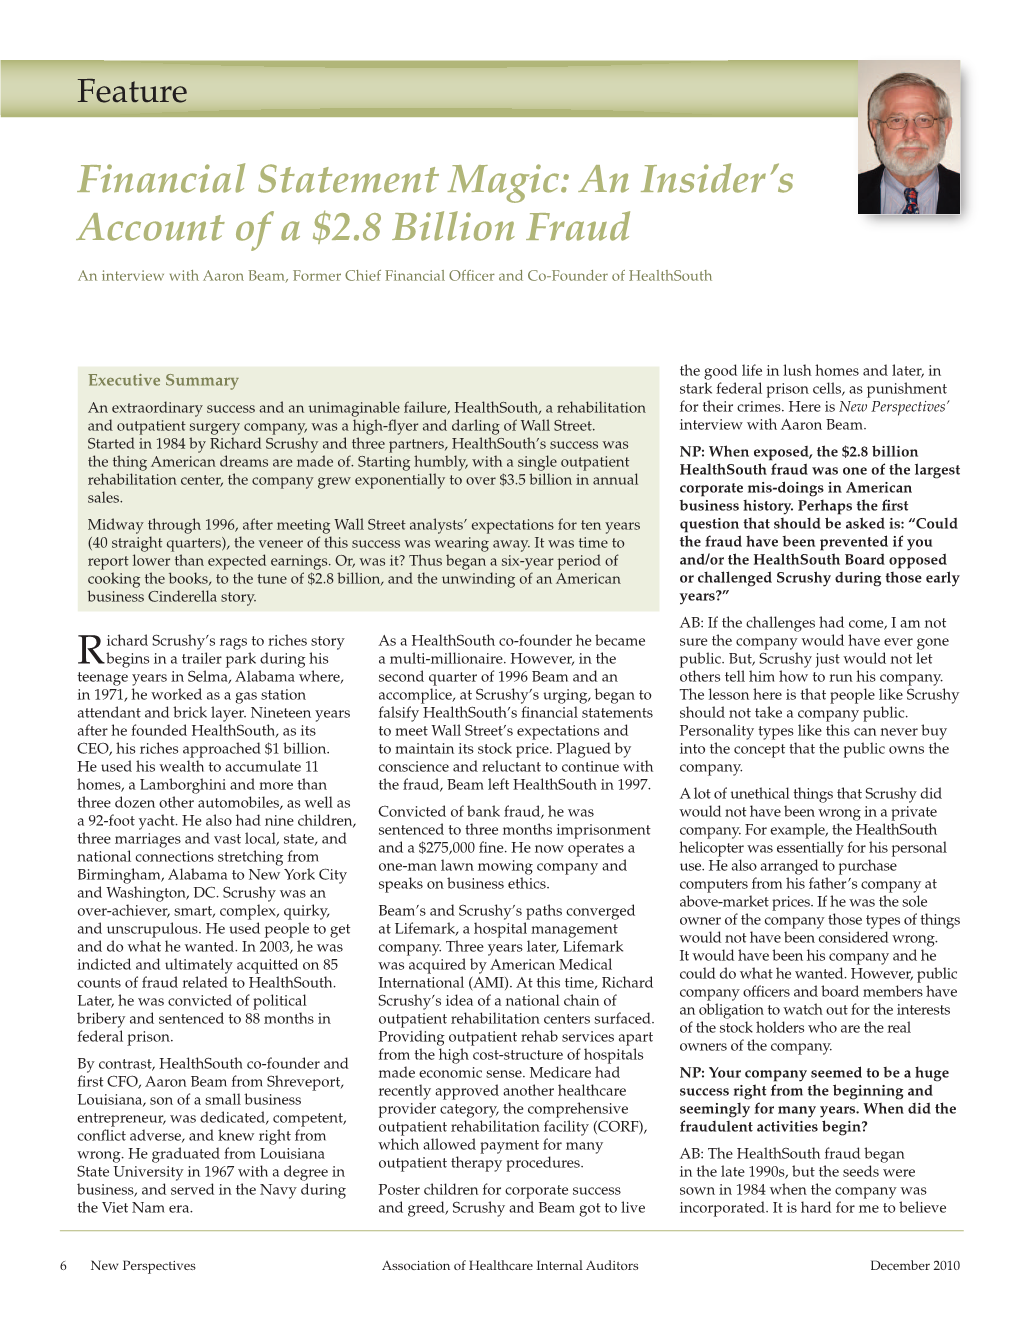 Financial Statement Magic: an Insider's Account of a $2.8 Billion